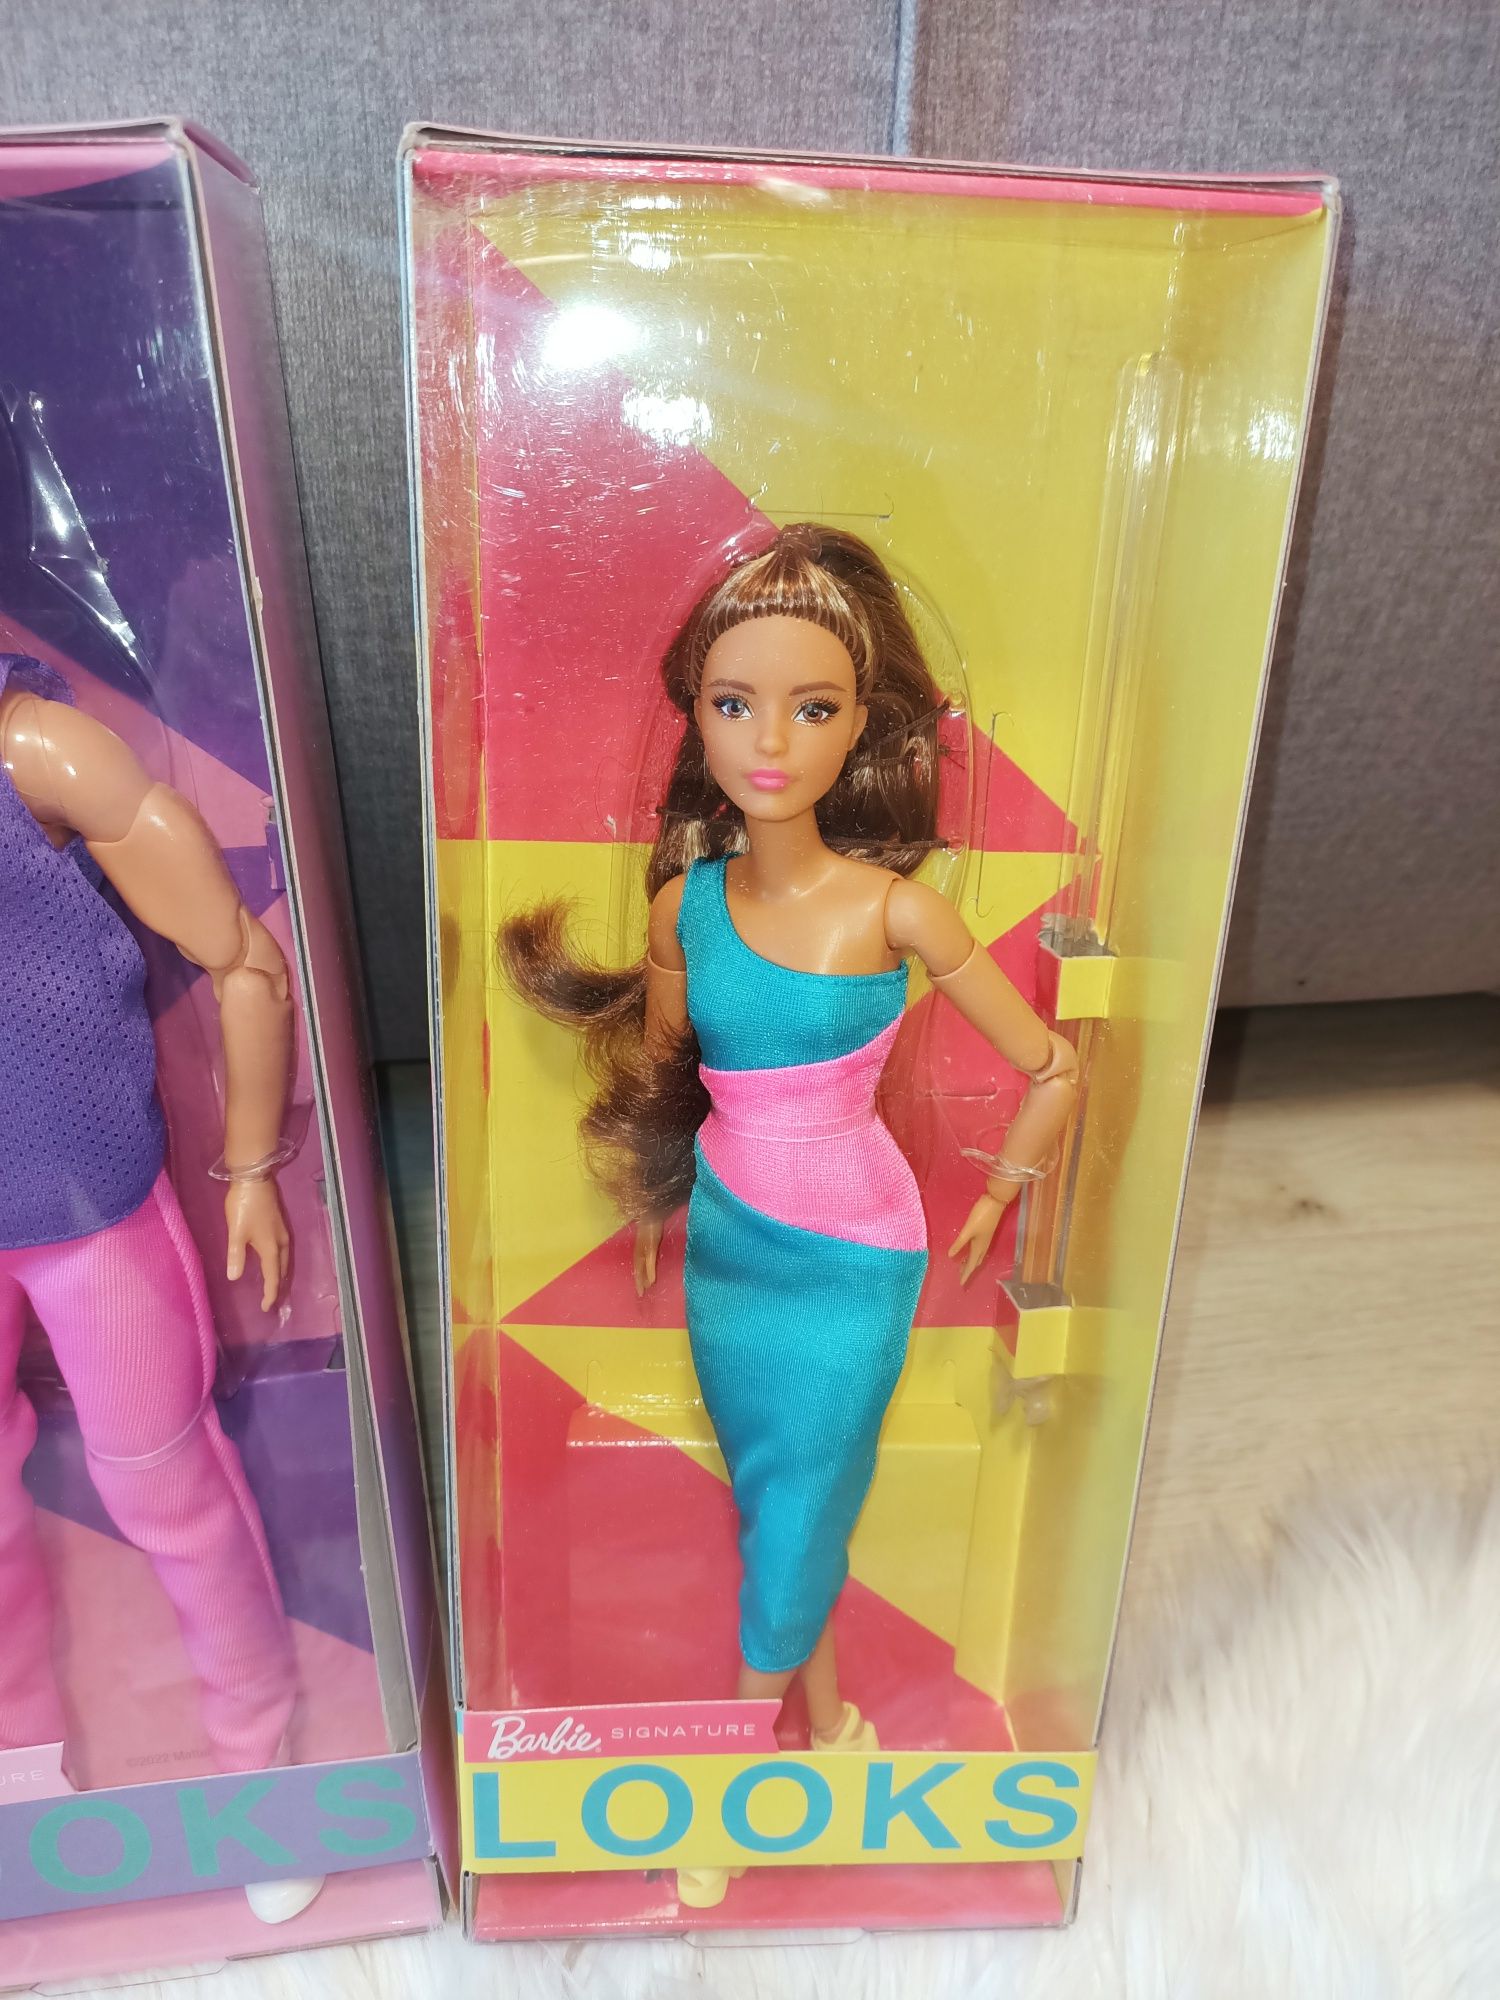 Barbie Signature Looks Dolls